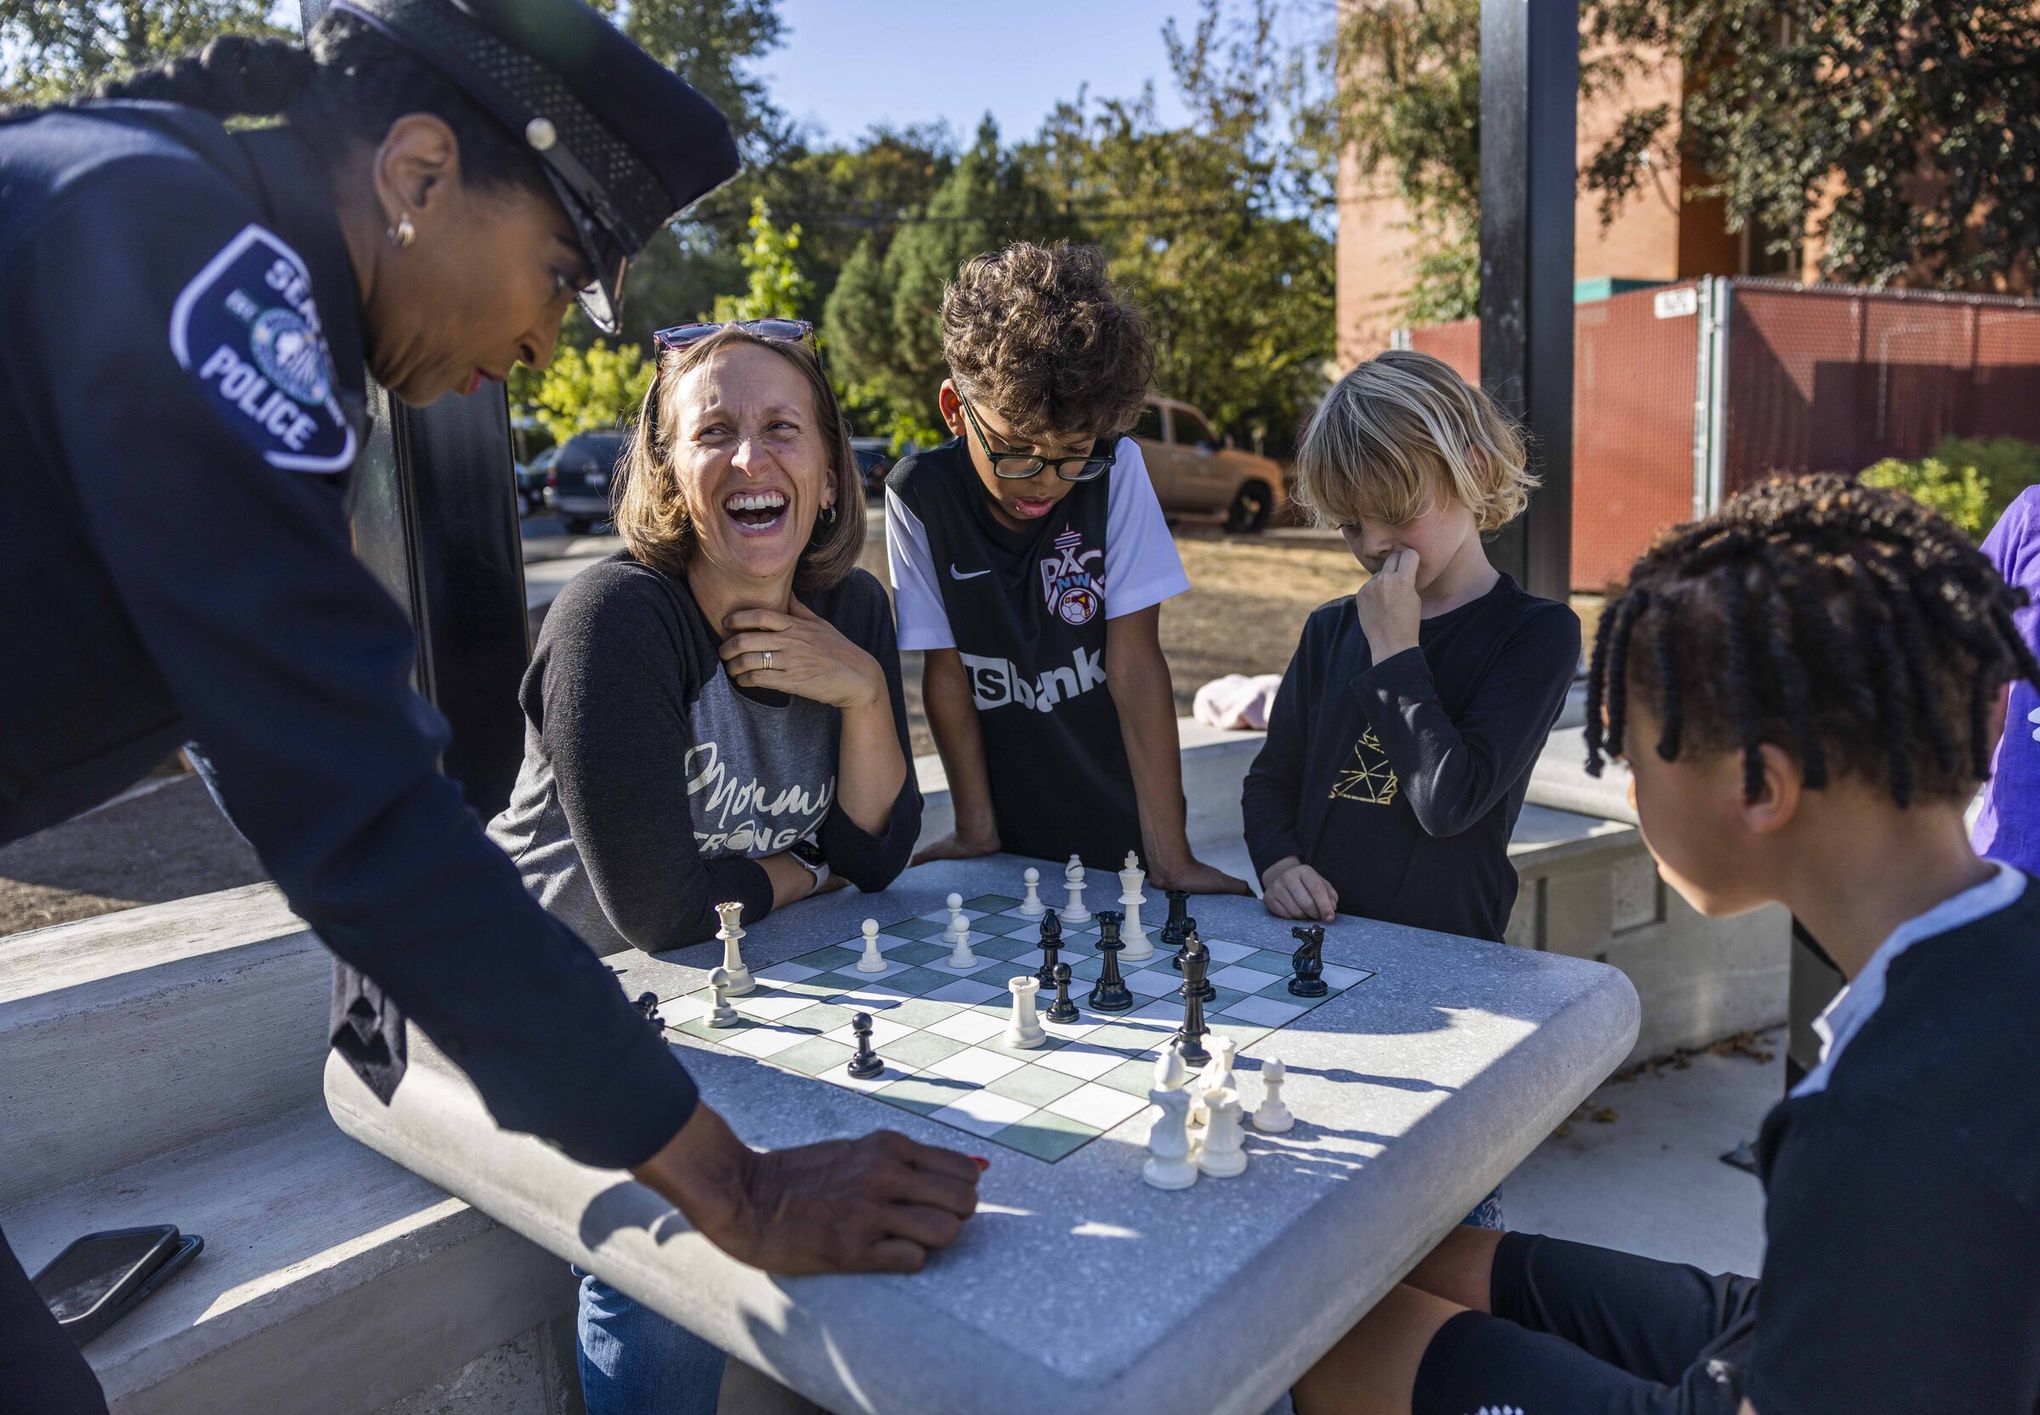 Chess Club for Teens  Washington County Free Library